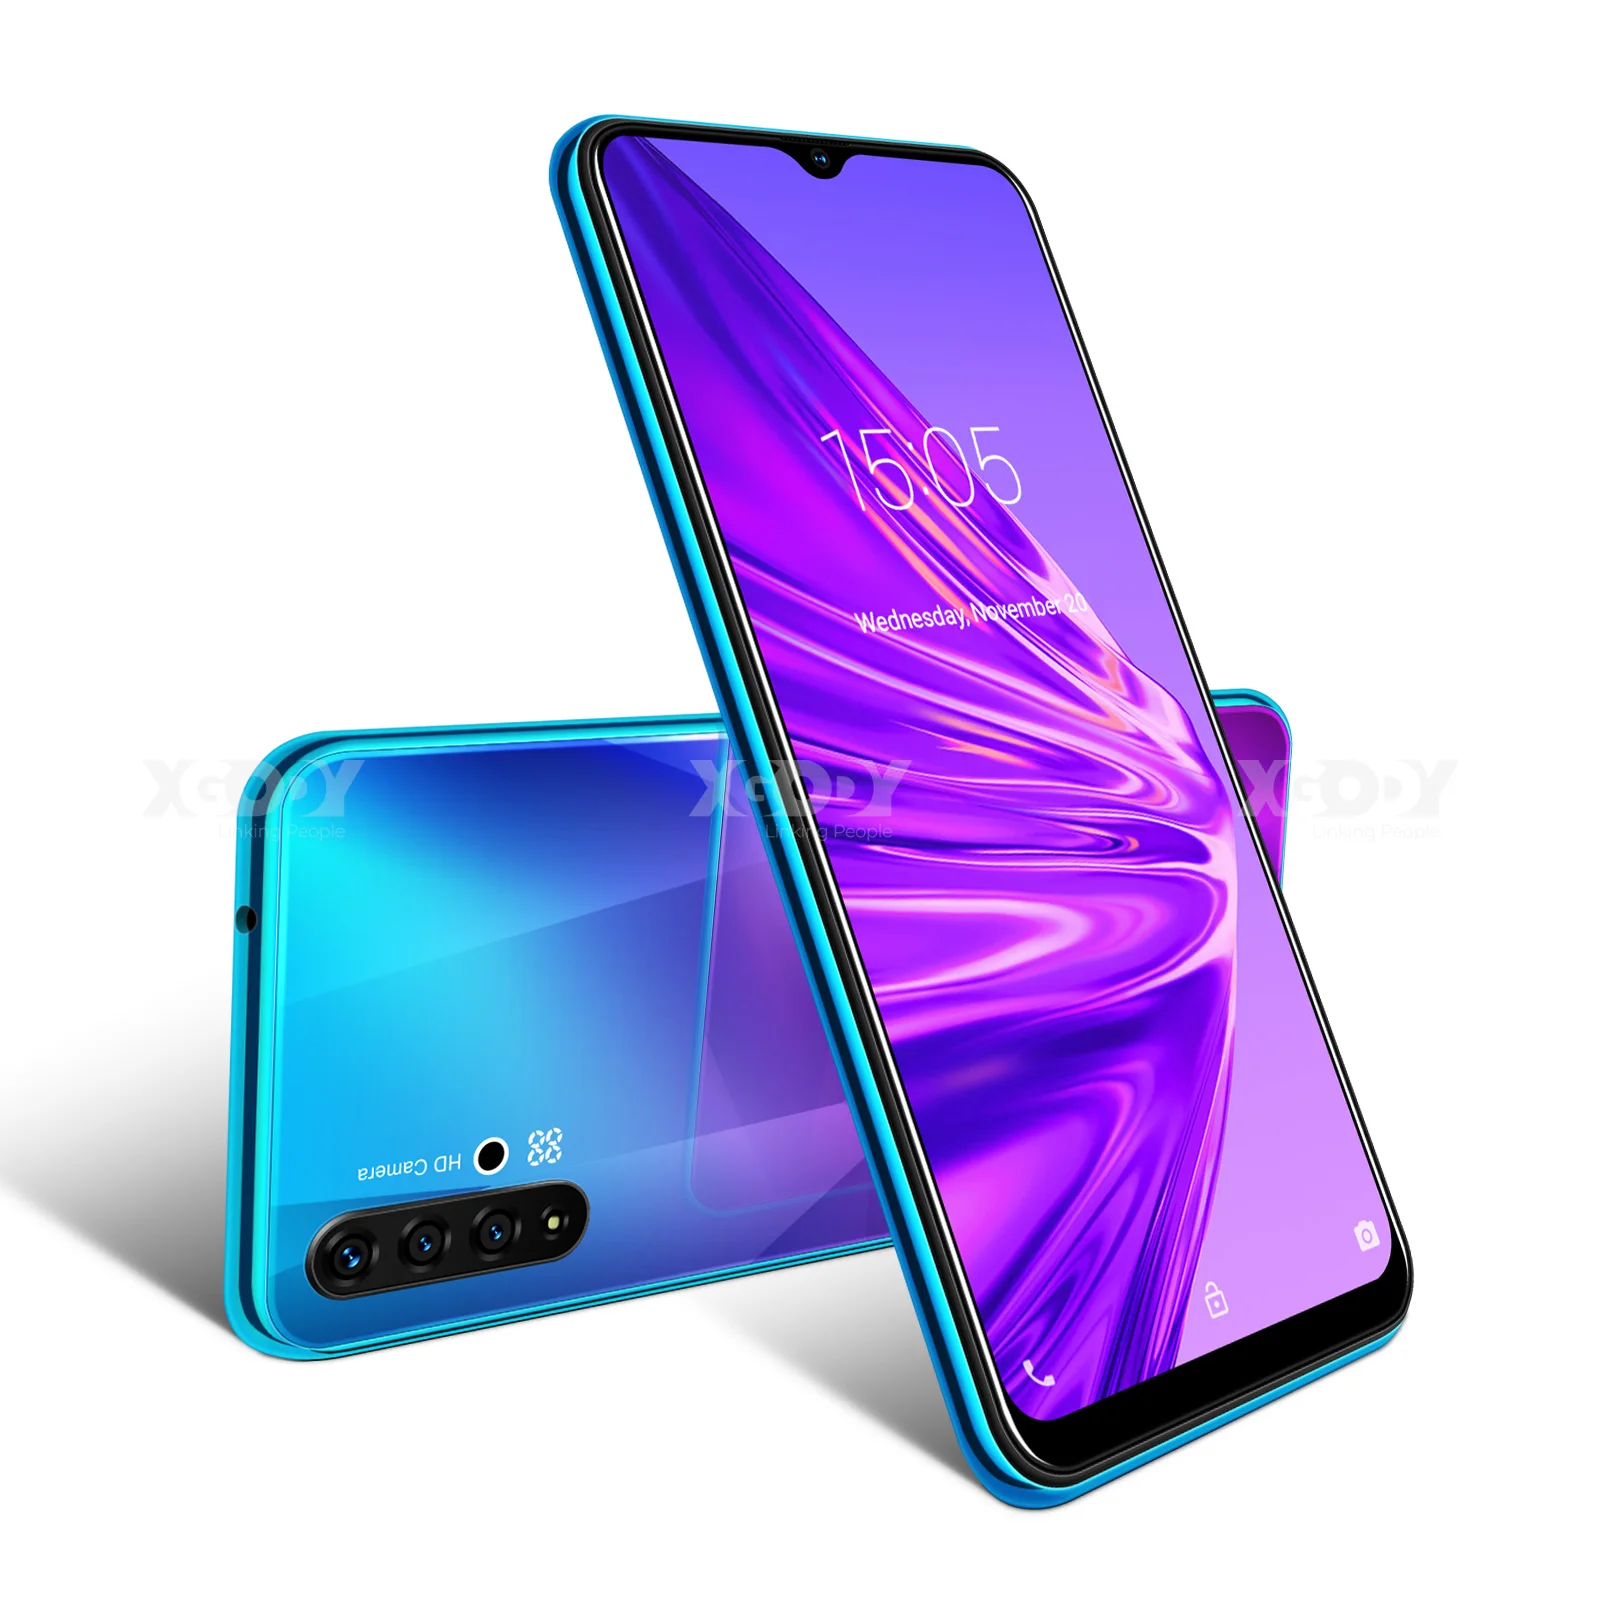 XGODY 6,5 дюймов 19:9 большой экран 3g Смартфон Android 9,0 1 ГБ 4 ГБ MTK6580 четырехъядерный 5 Мп камера 3000 мАч wifi gps мобильный телефон - Цвет: Gradient purple